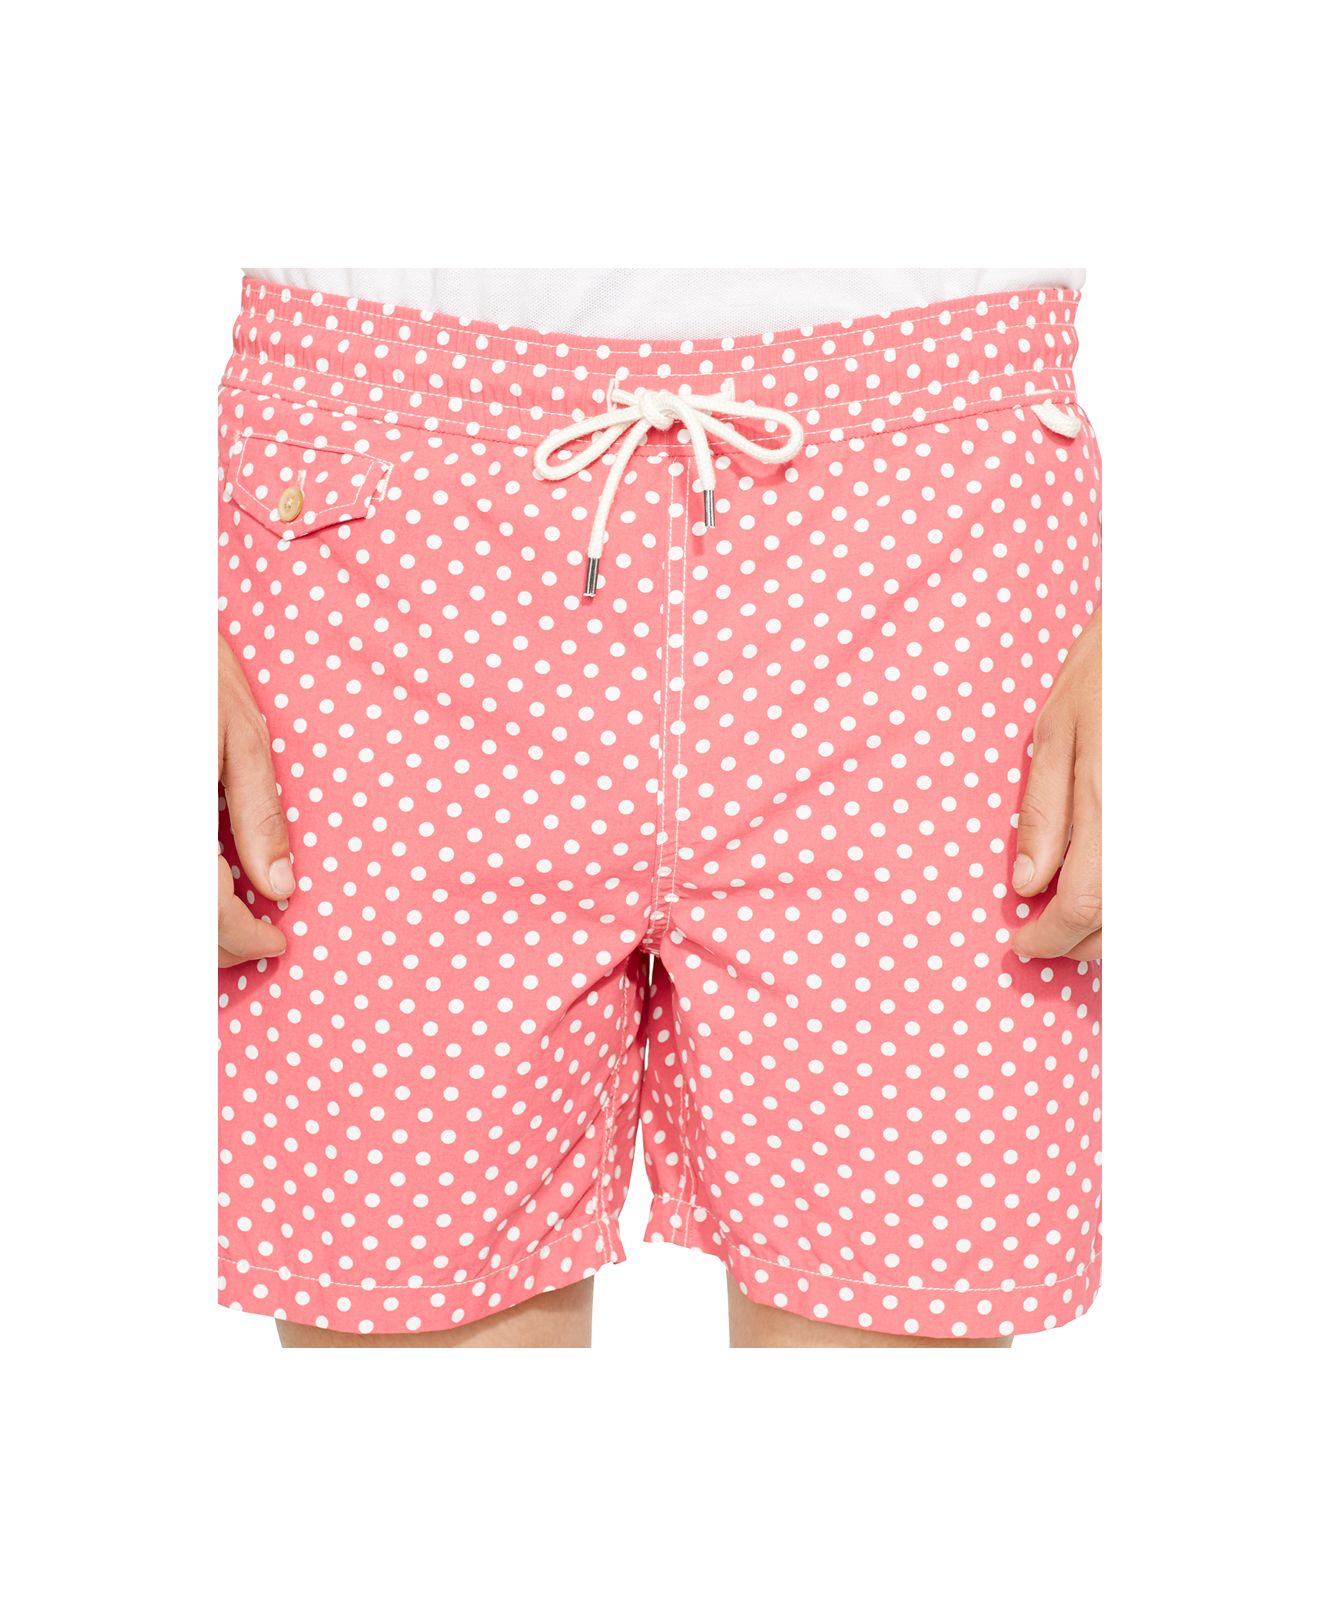 Lyst - Polo Ralph Lauren Traveler Dotted Swim Shorts in Pink for Men